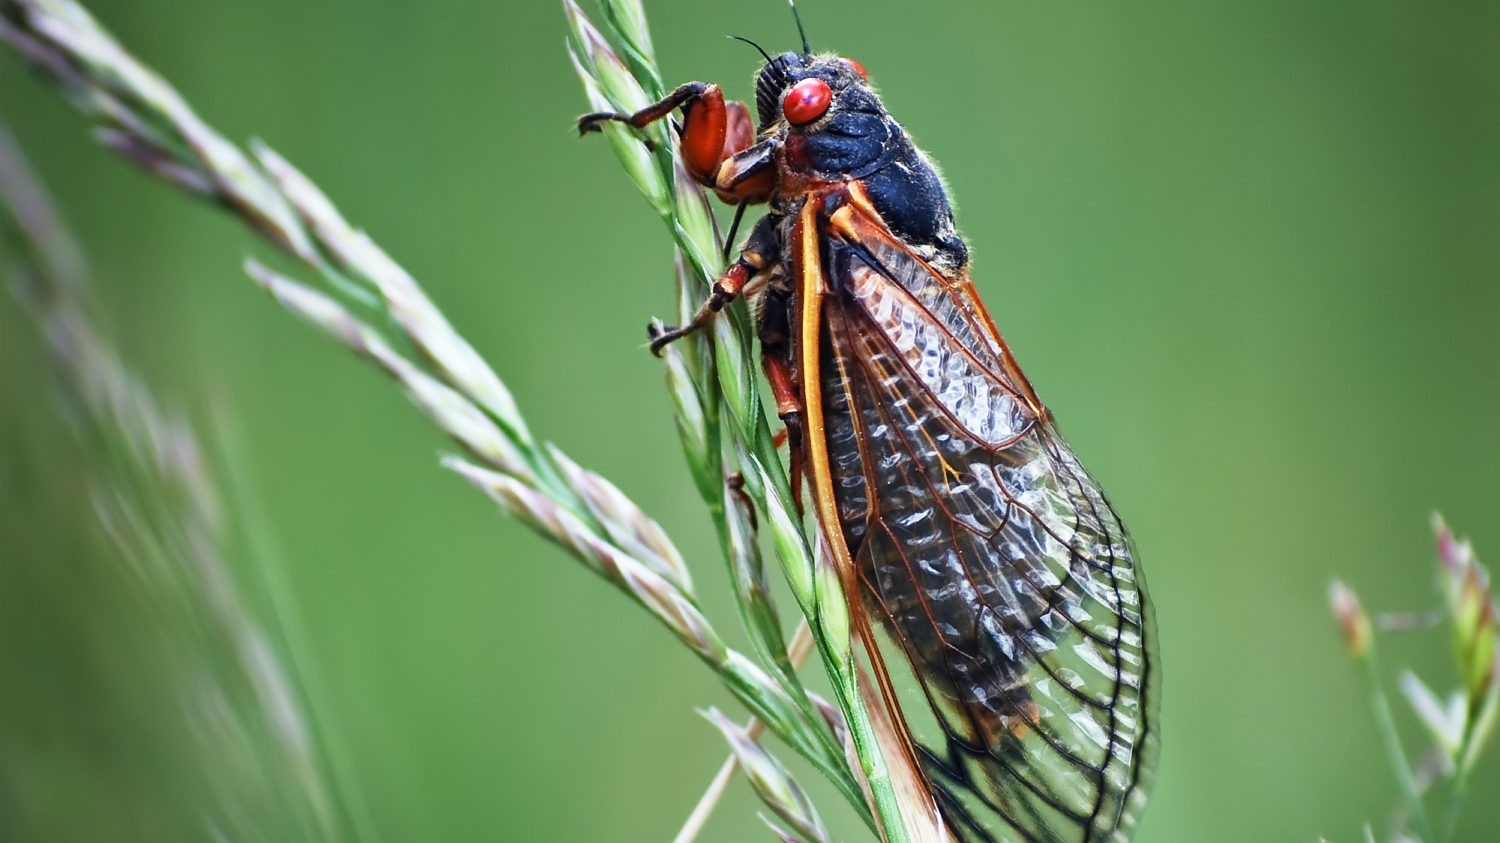 Cicada clinging to green grass